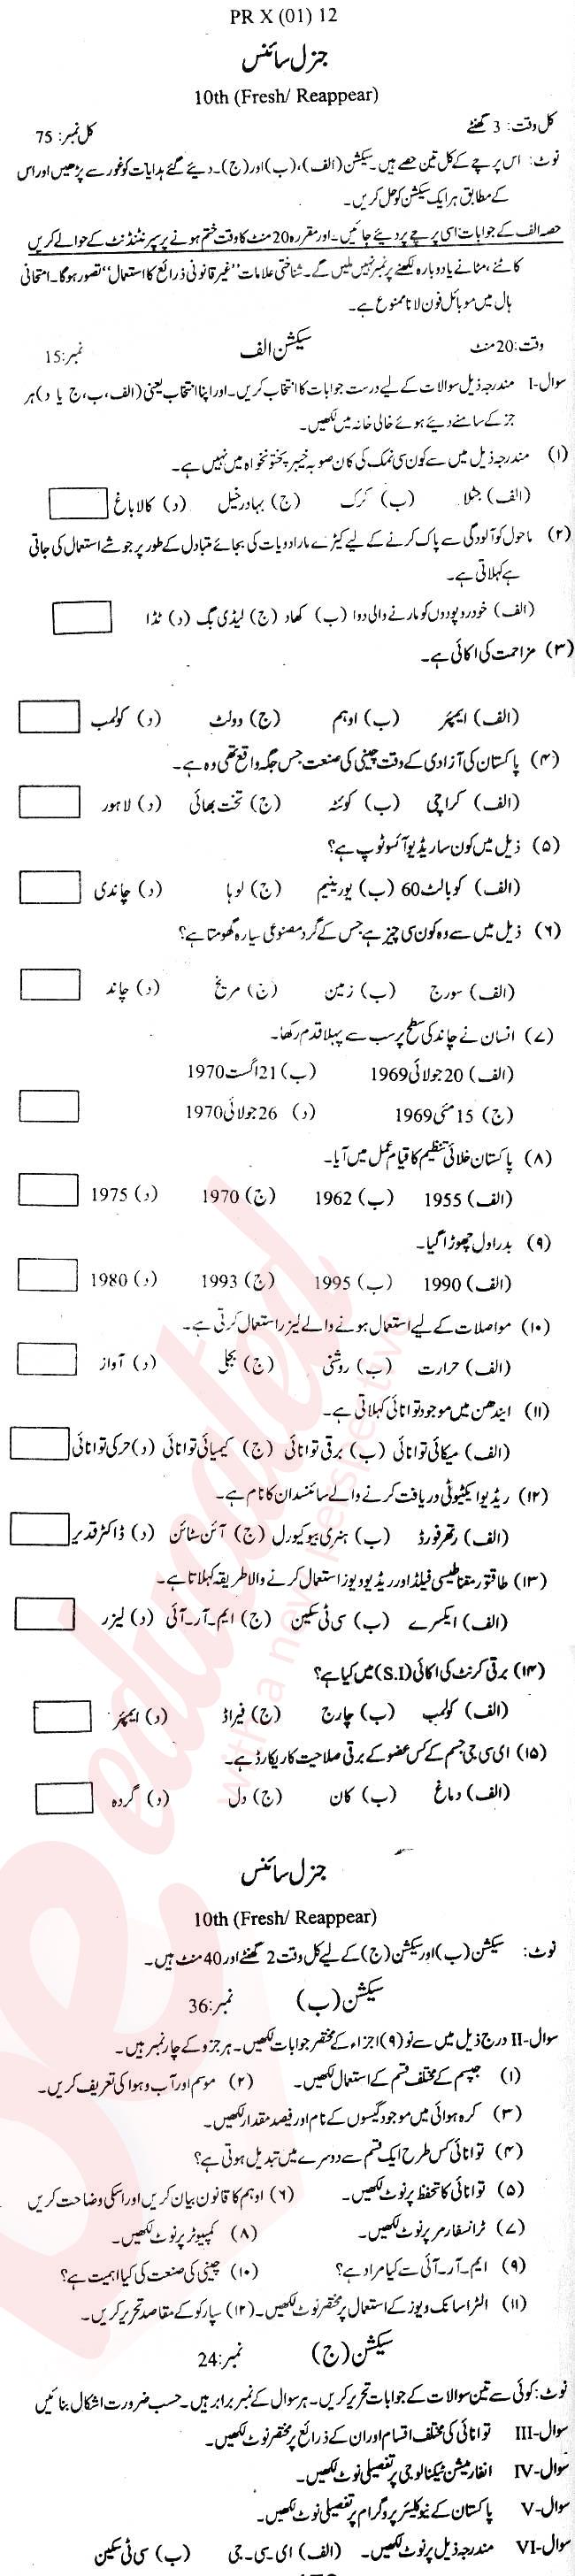 General Science 10th Urdu Medium Past Paper Group 1 BISE Malakand 2012